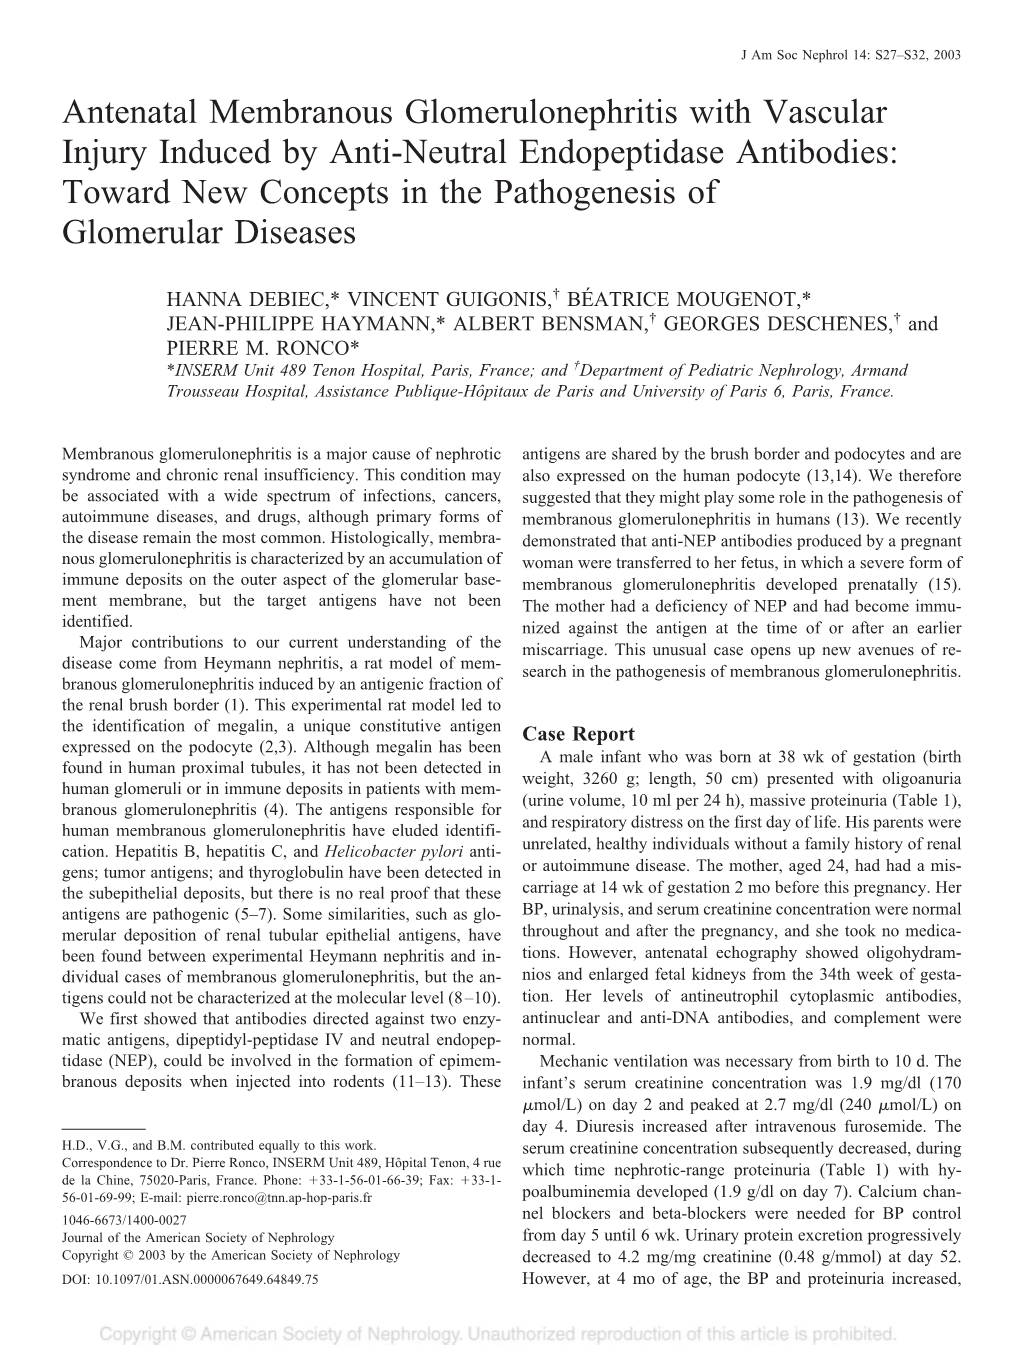 Antenatal Membranous Glomerulonephritis With